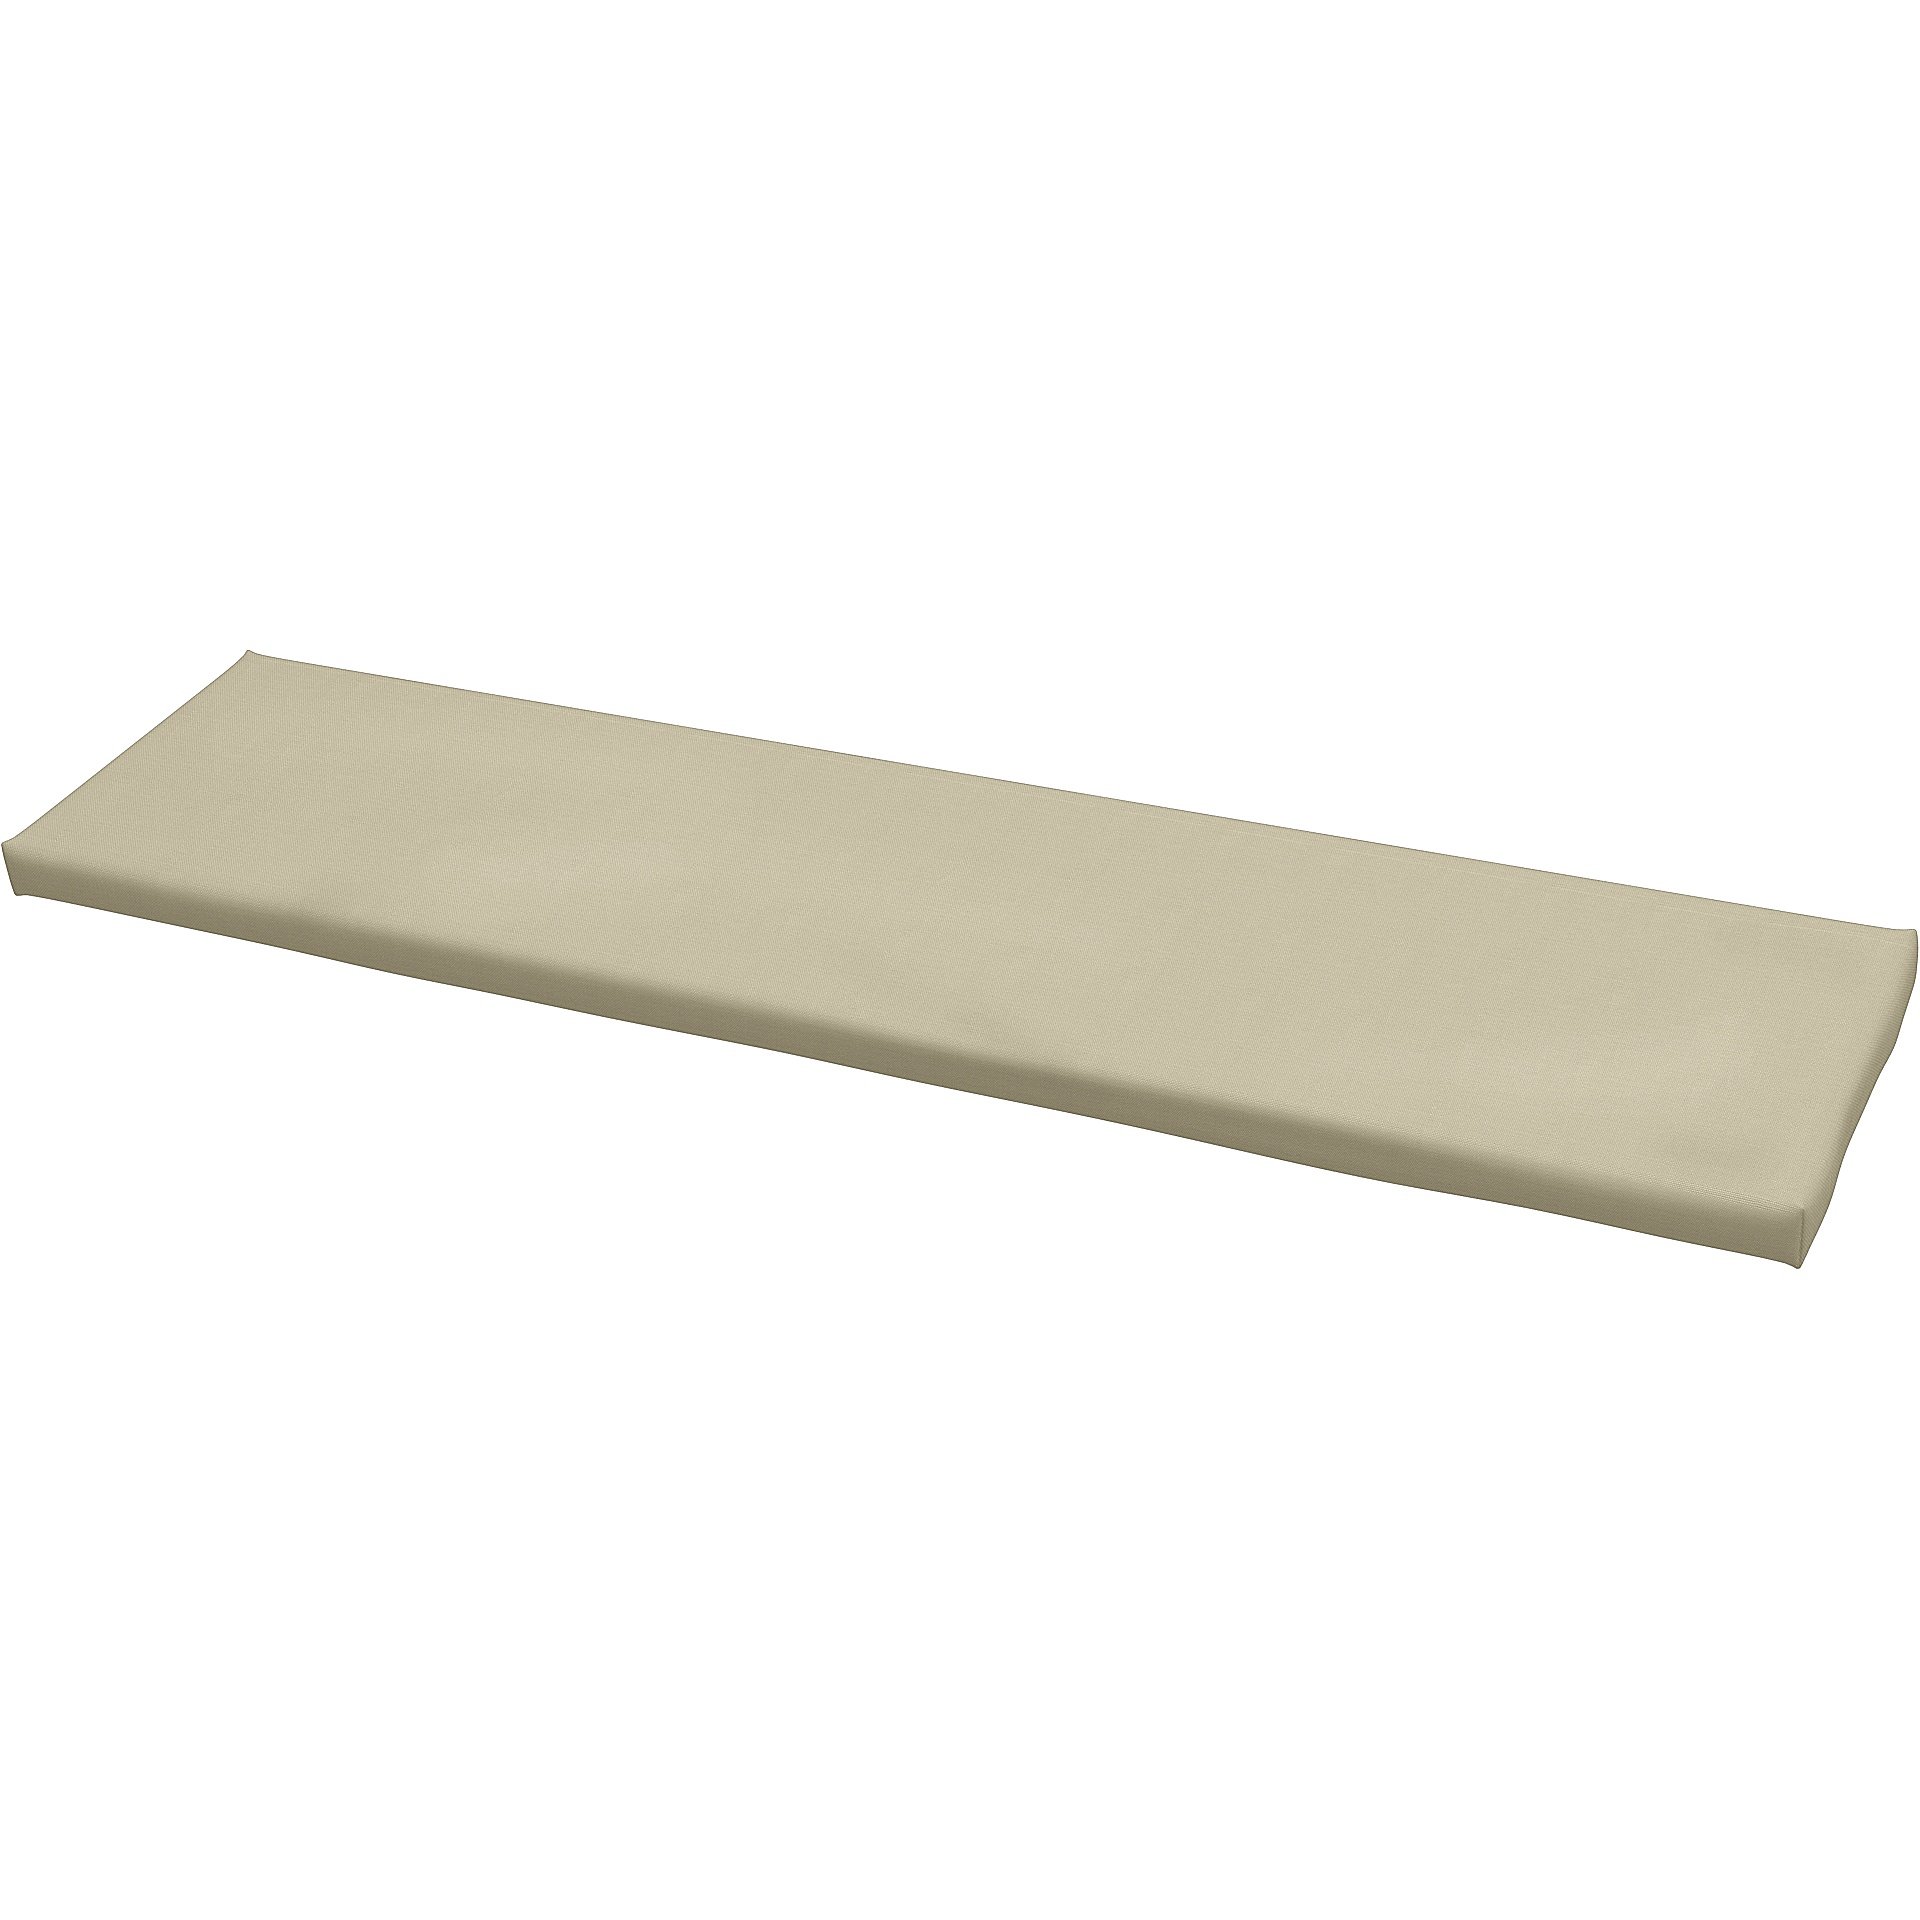 IKEA - Universal bench cushion cover 140x35x3,5 cm, Sand Beige, Cotton - Bemz